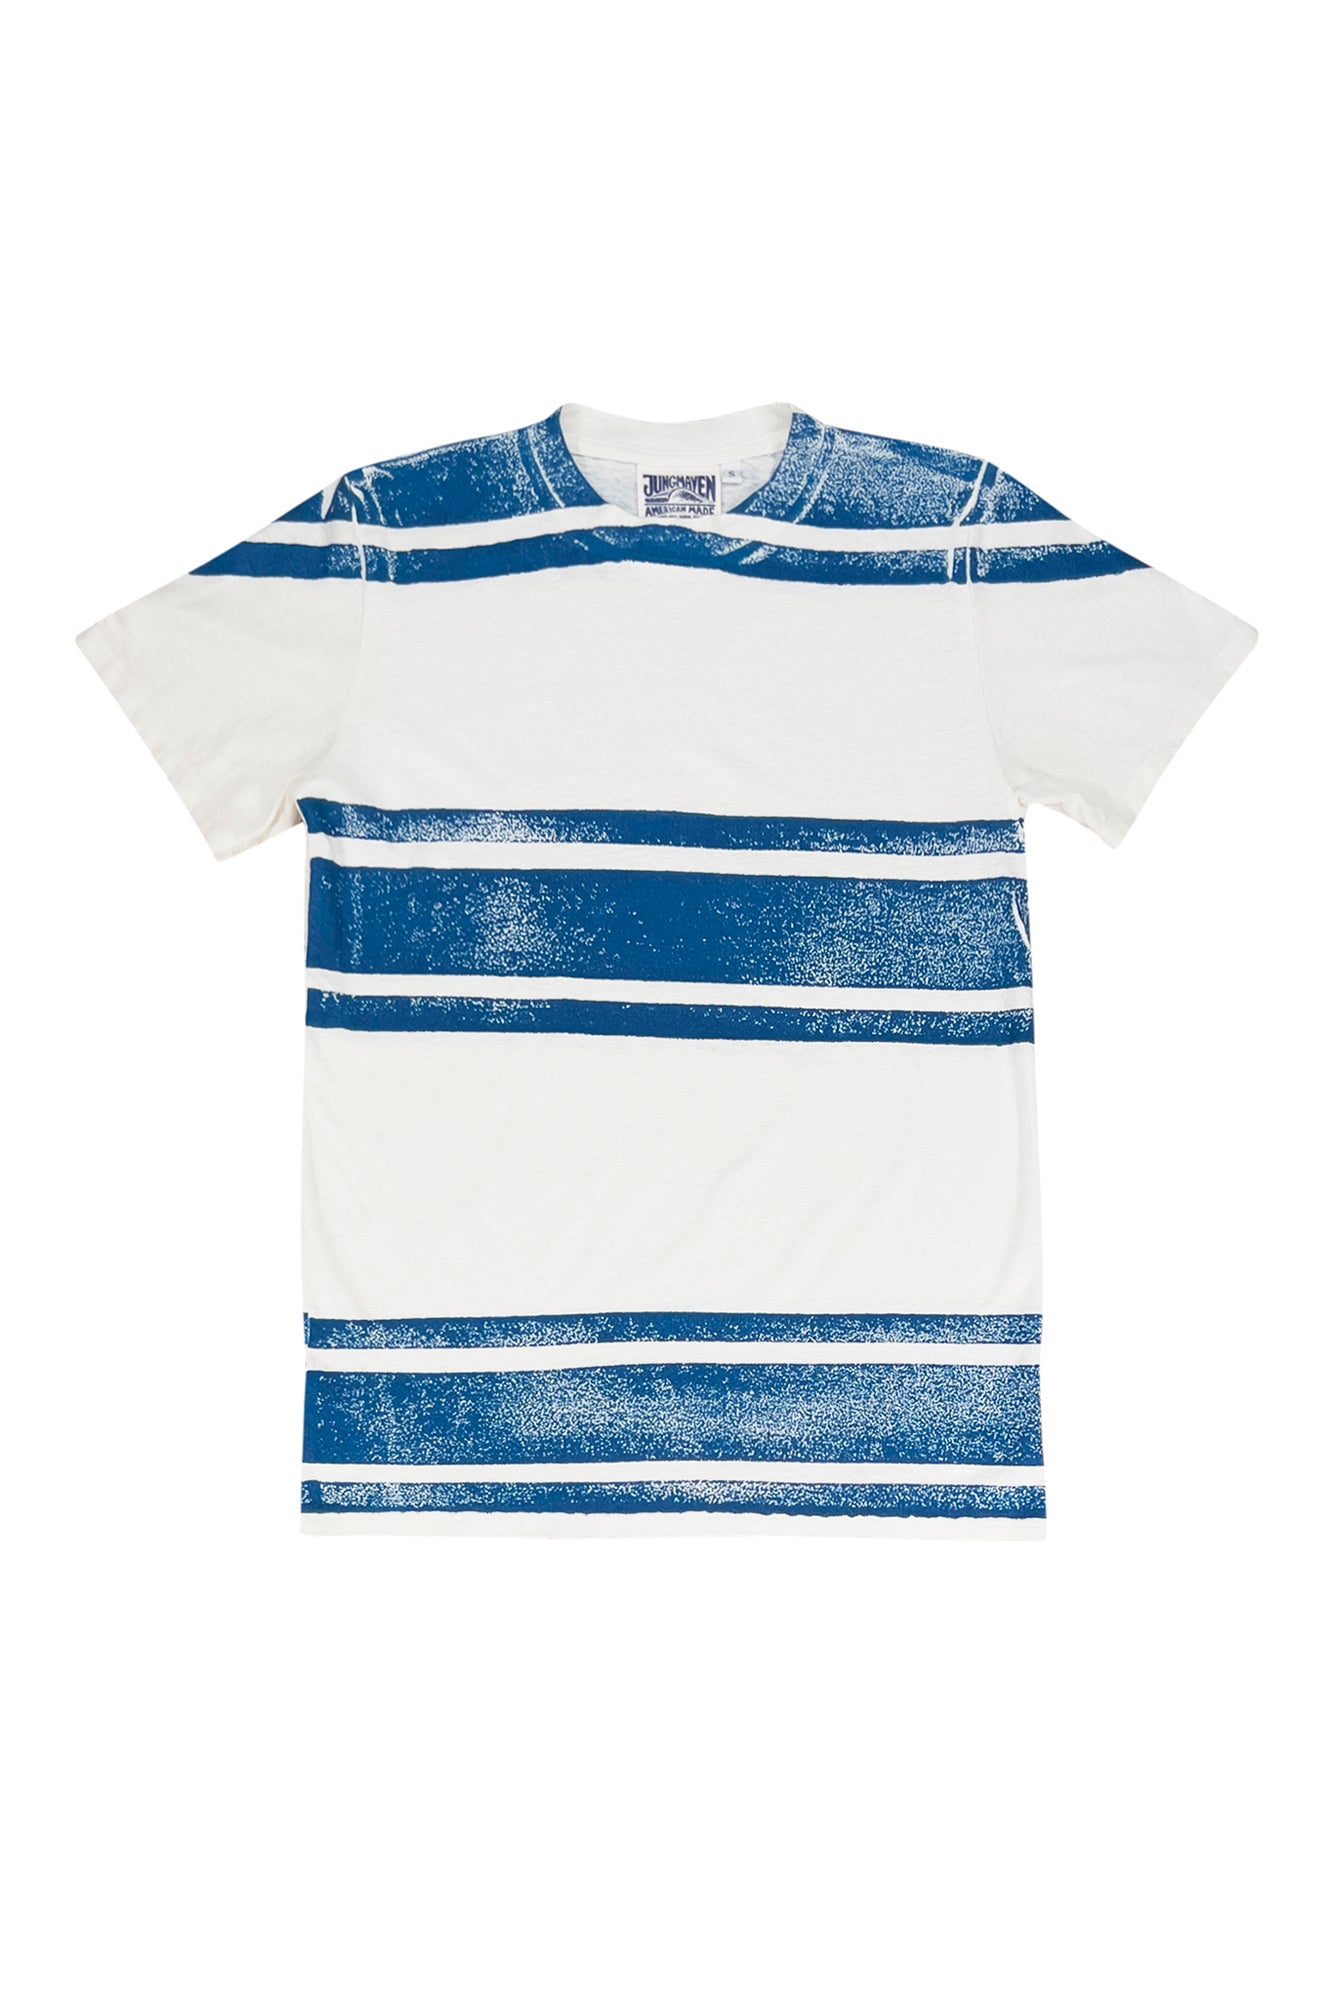 Three Stripe Jung Tee | Jungmaven Hemp Clothing & Accessories / Color: Galaxy Blue